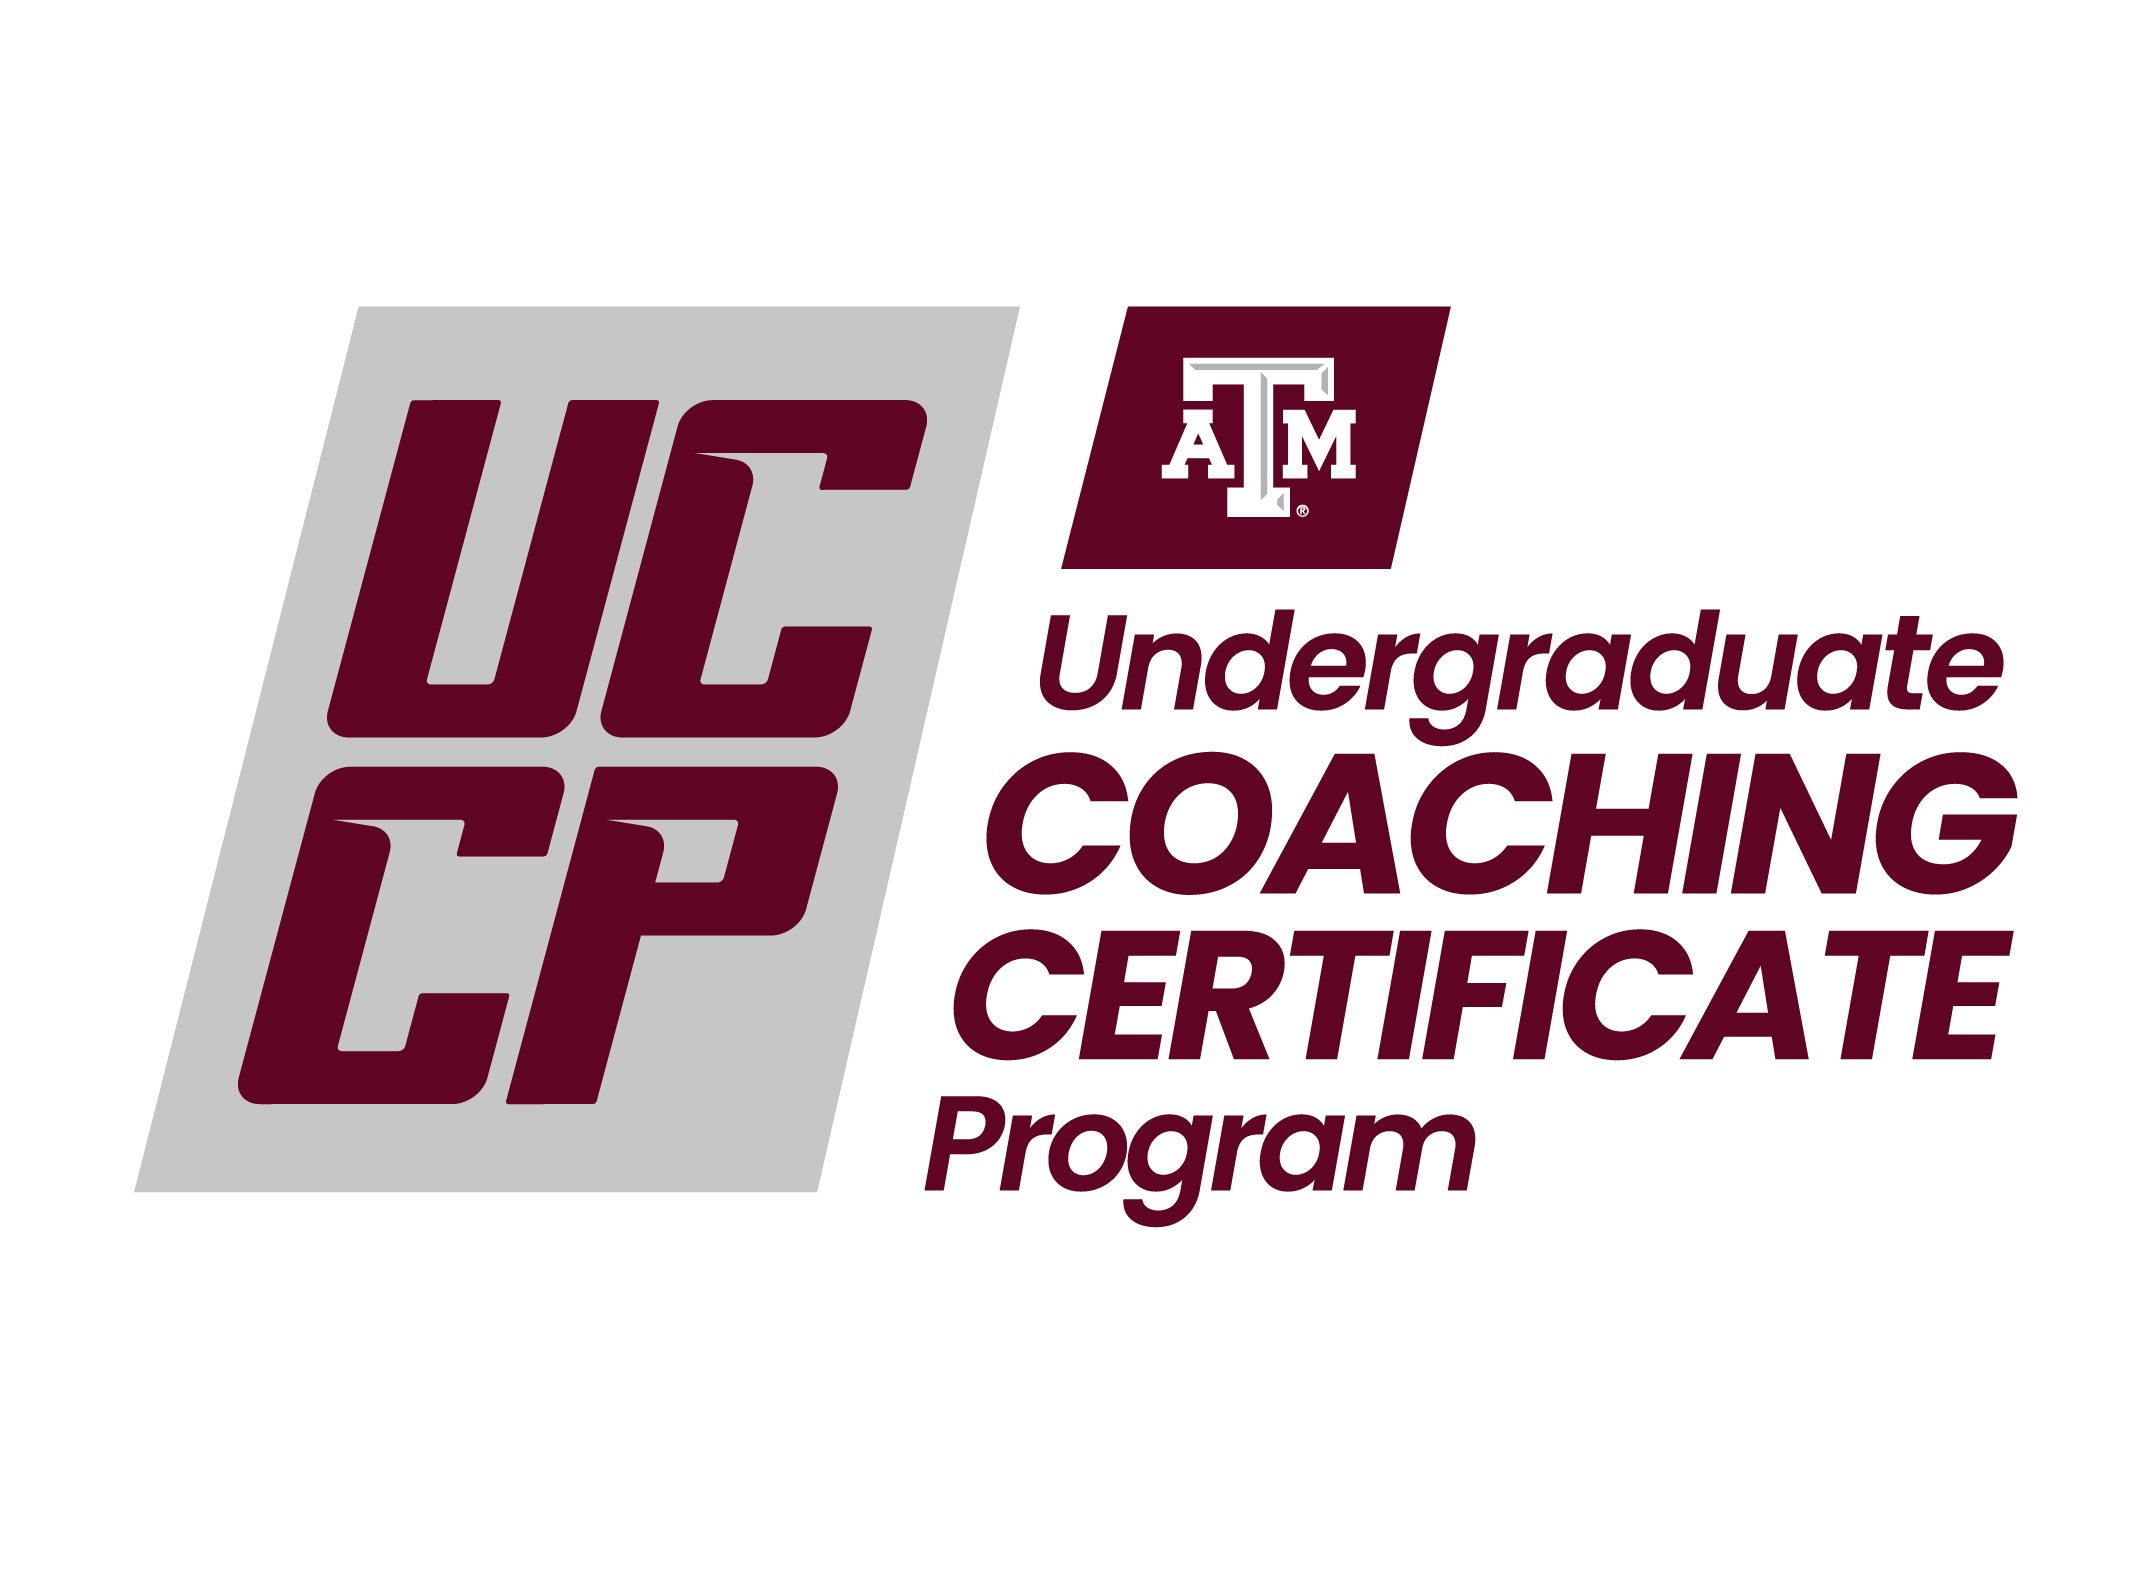 Thornton-McFerrin Coaching Academy Coaching Certificate Program - Texas A&M University